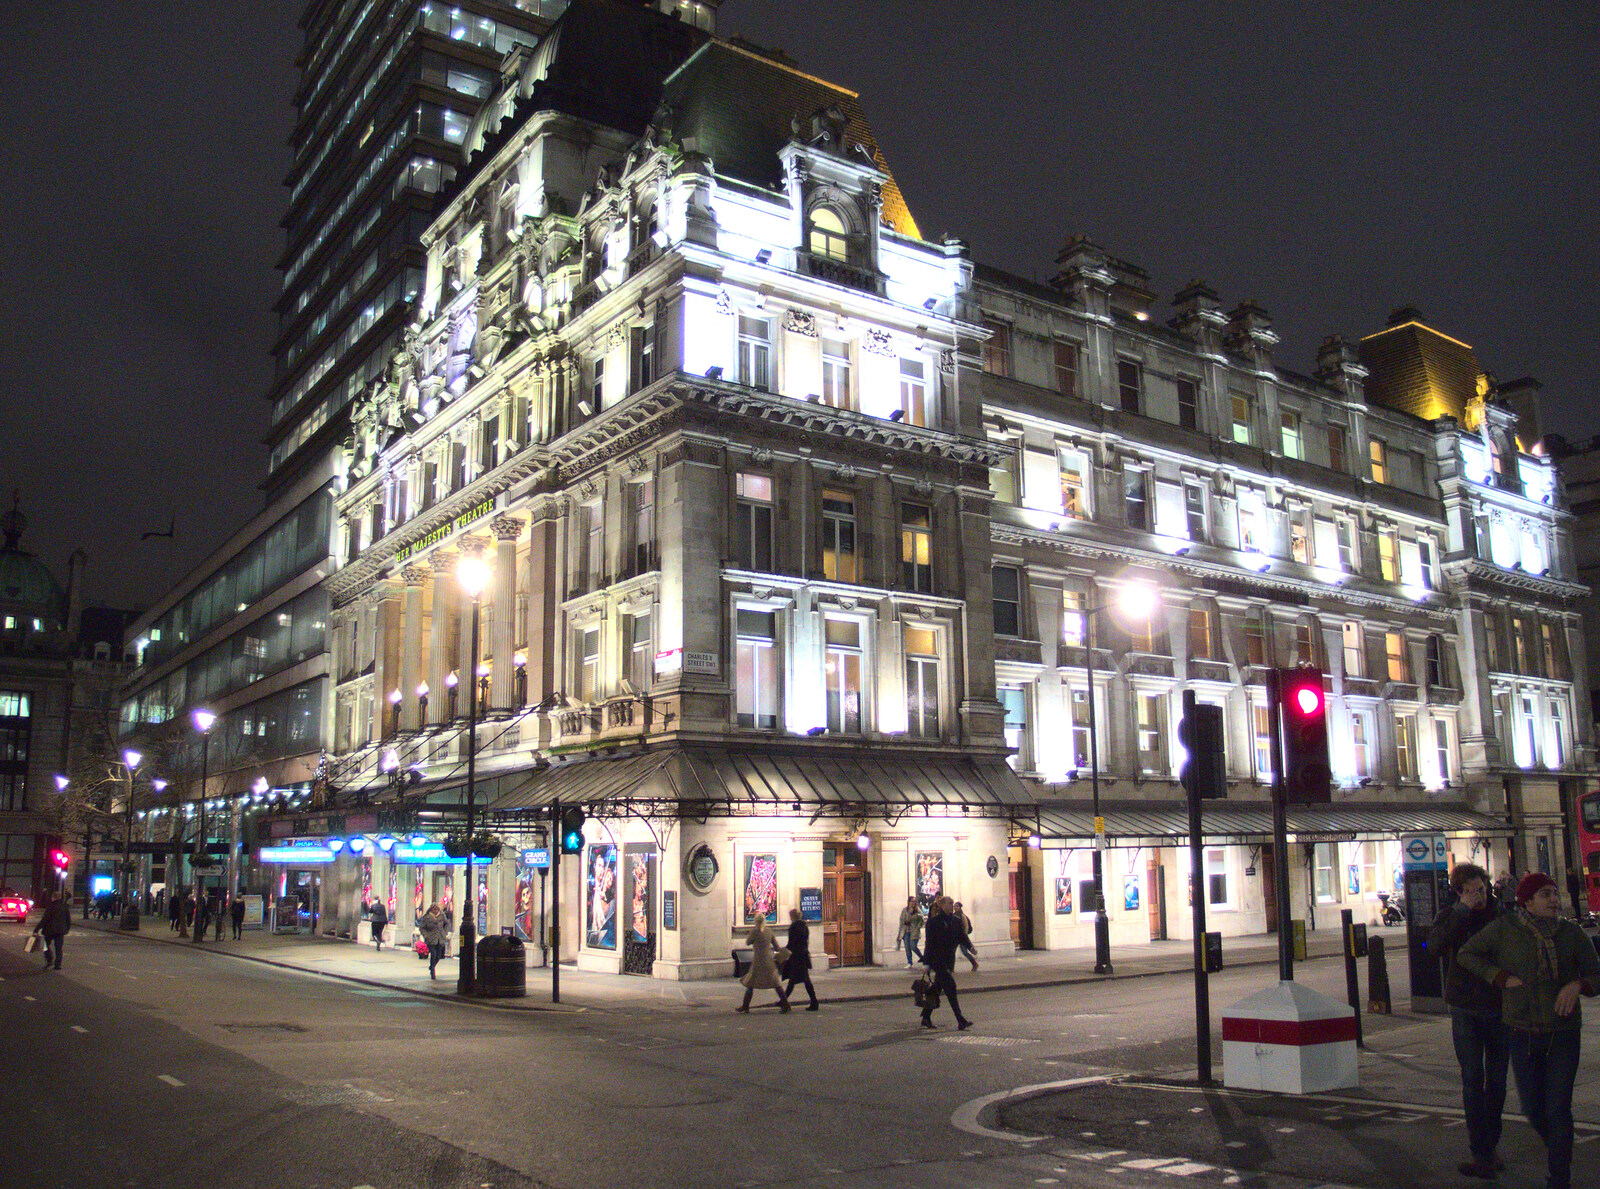 Her Majesty's Theatre, Haymarket from SwiftKey Innovation Nights, Westminster, London - 19th December 2014